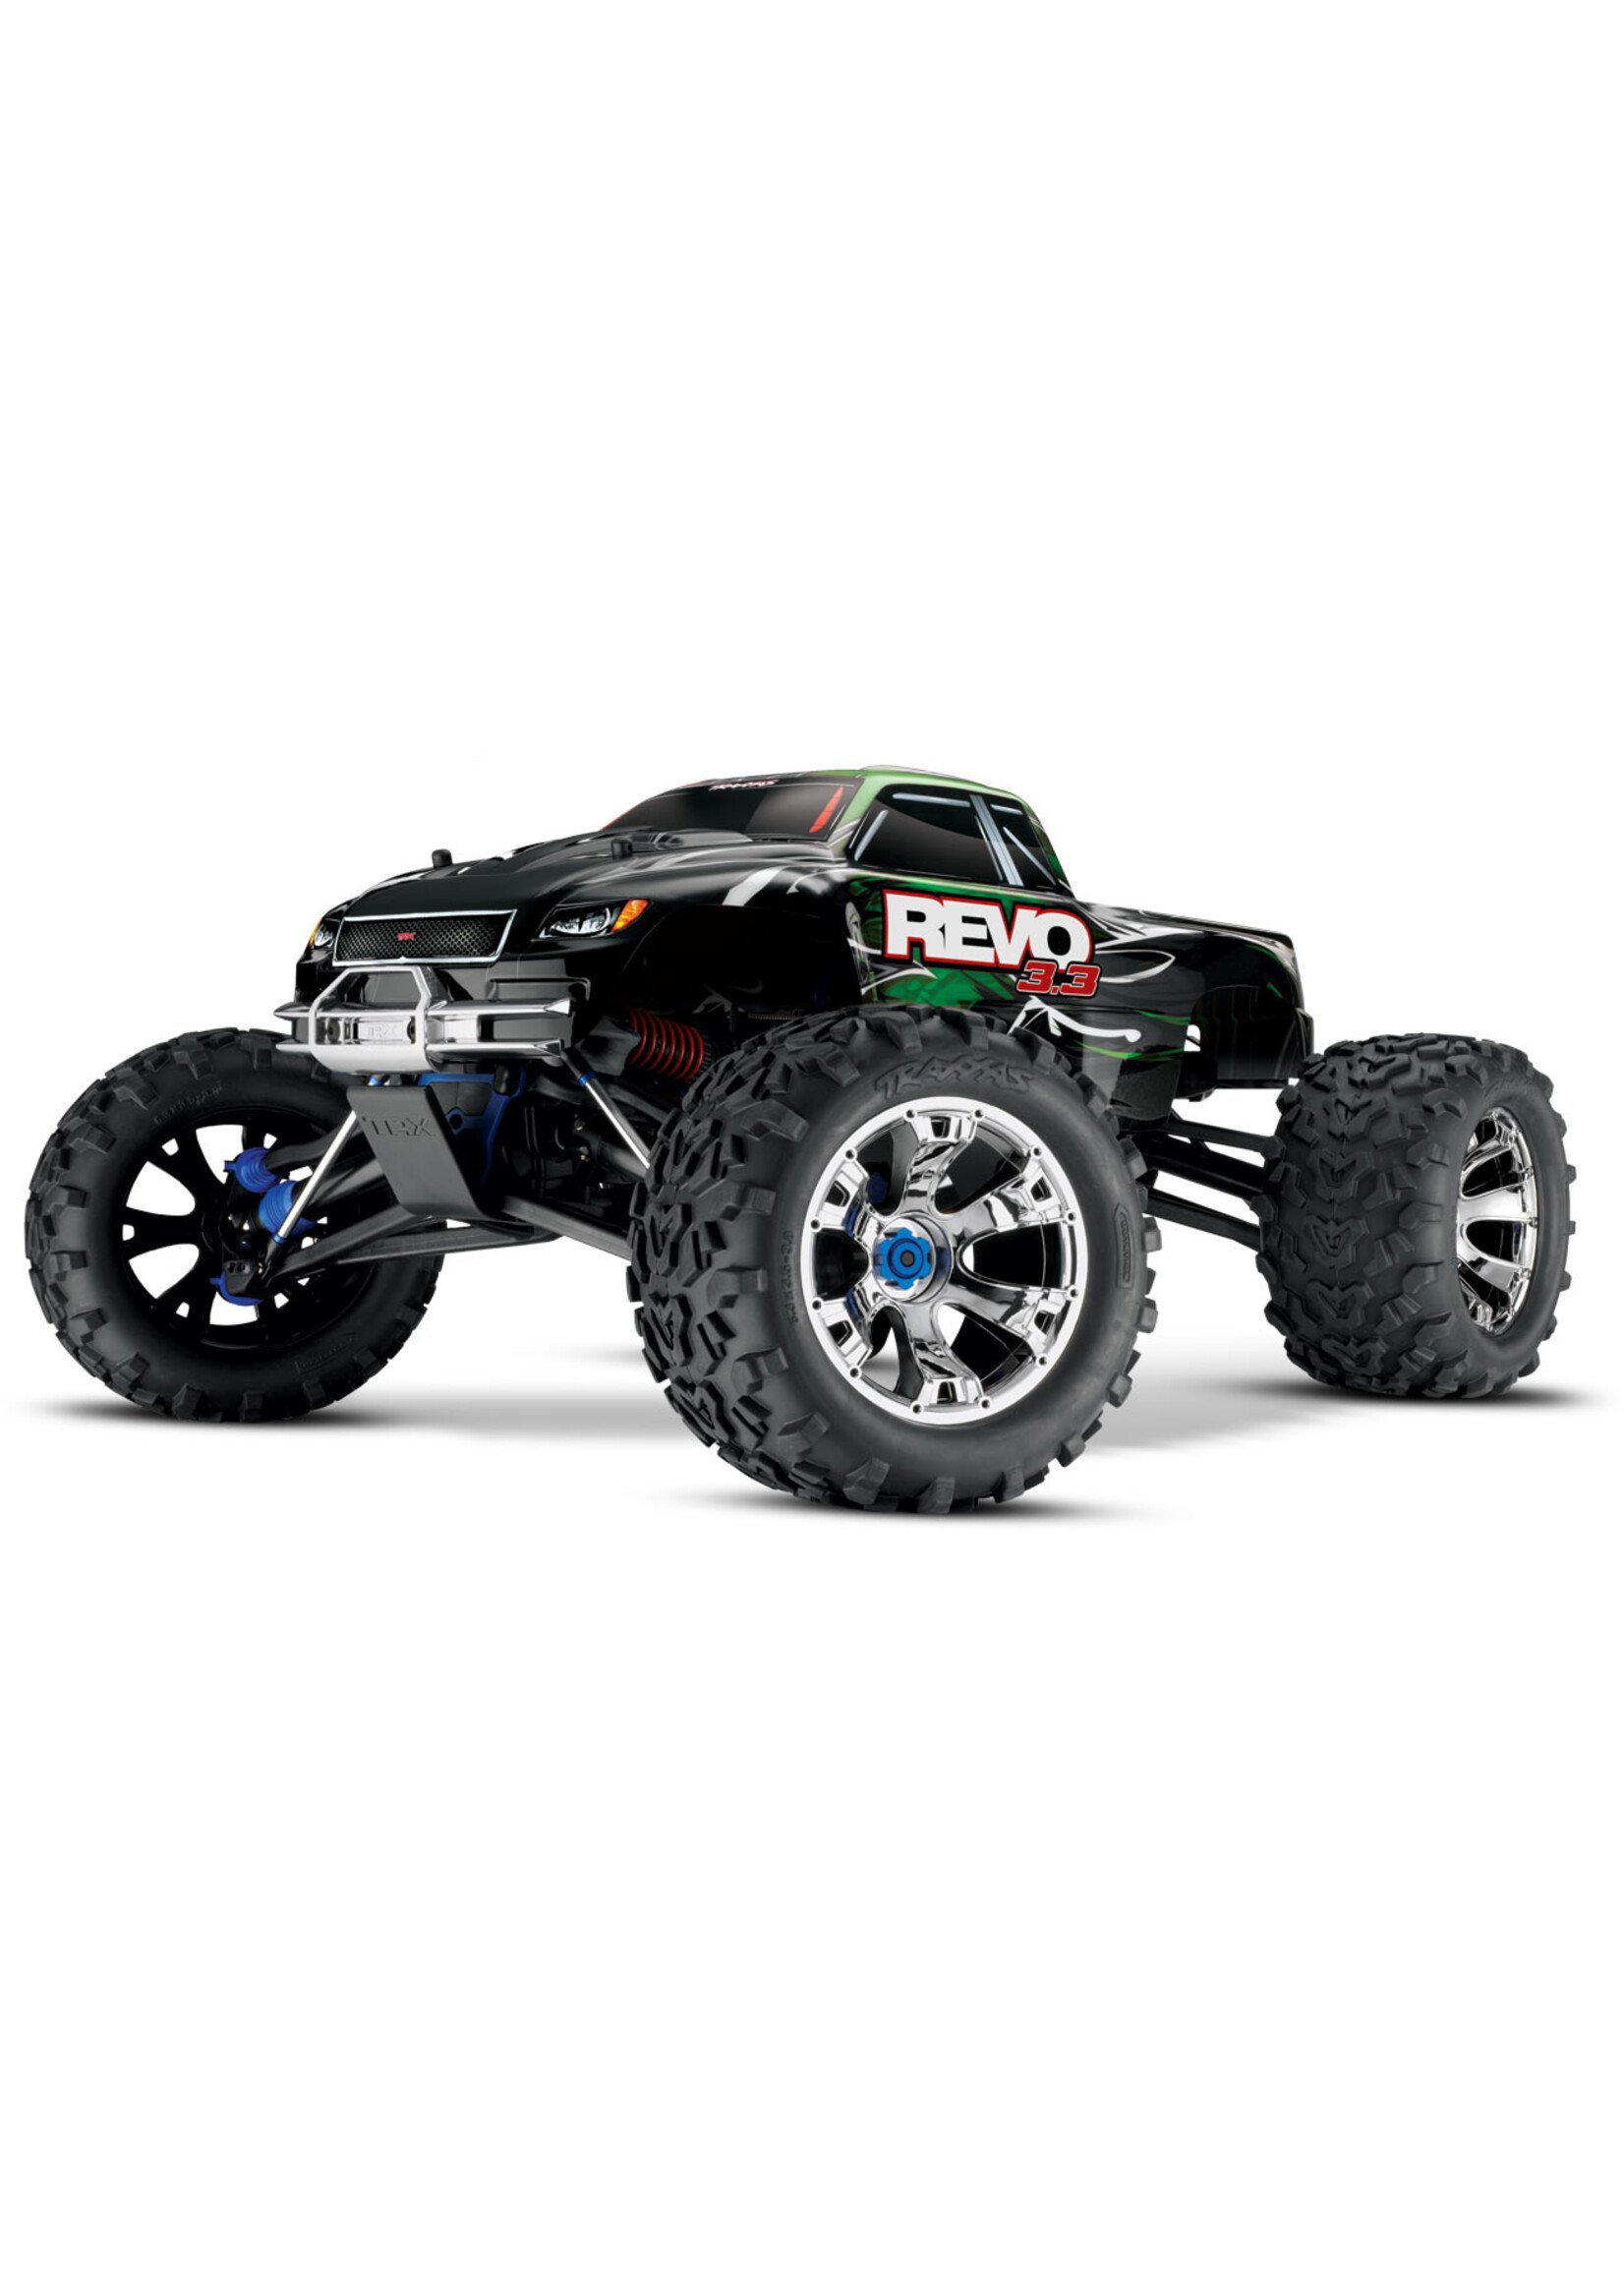 Traxxas 1/10 Revo 3.3 4WD Nitro Monster Truck - Green